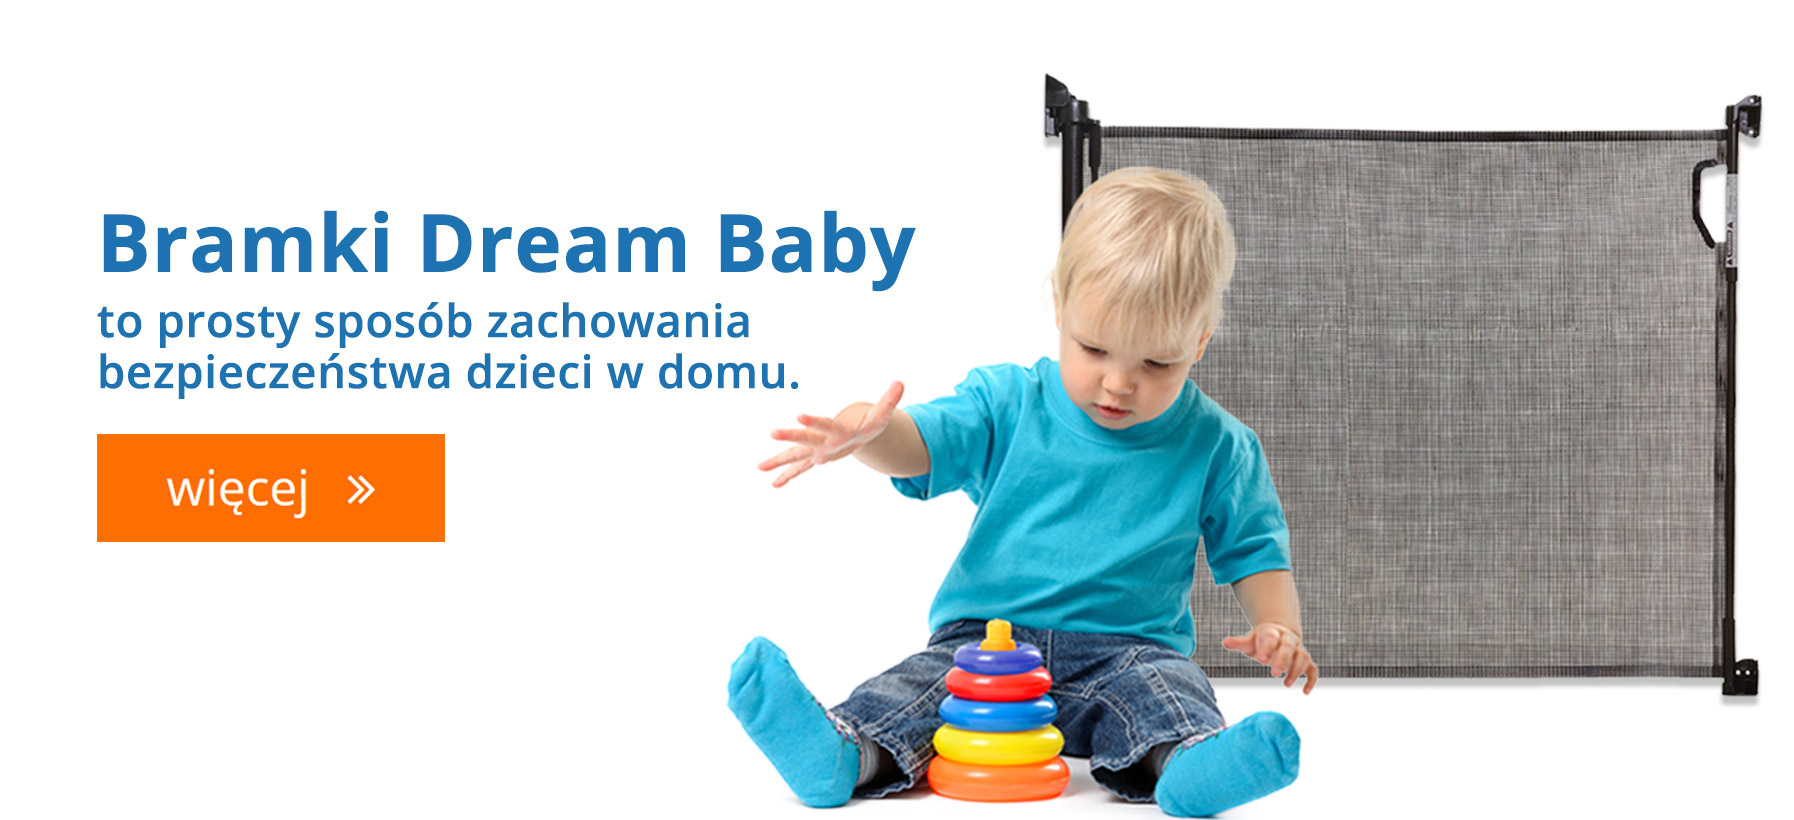 Dream Baby Bramki